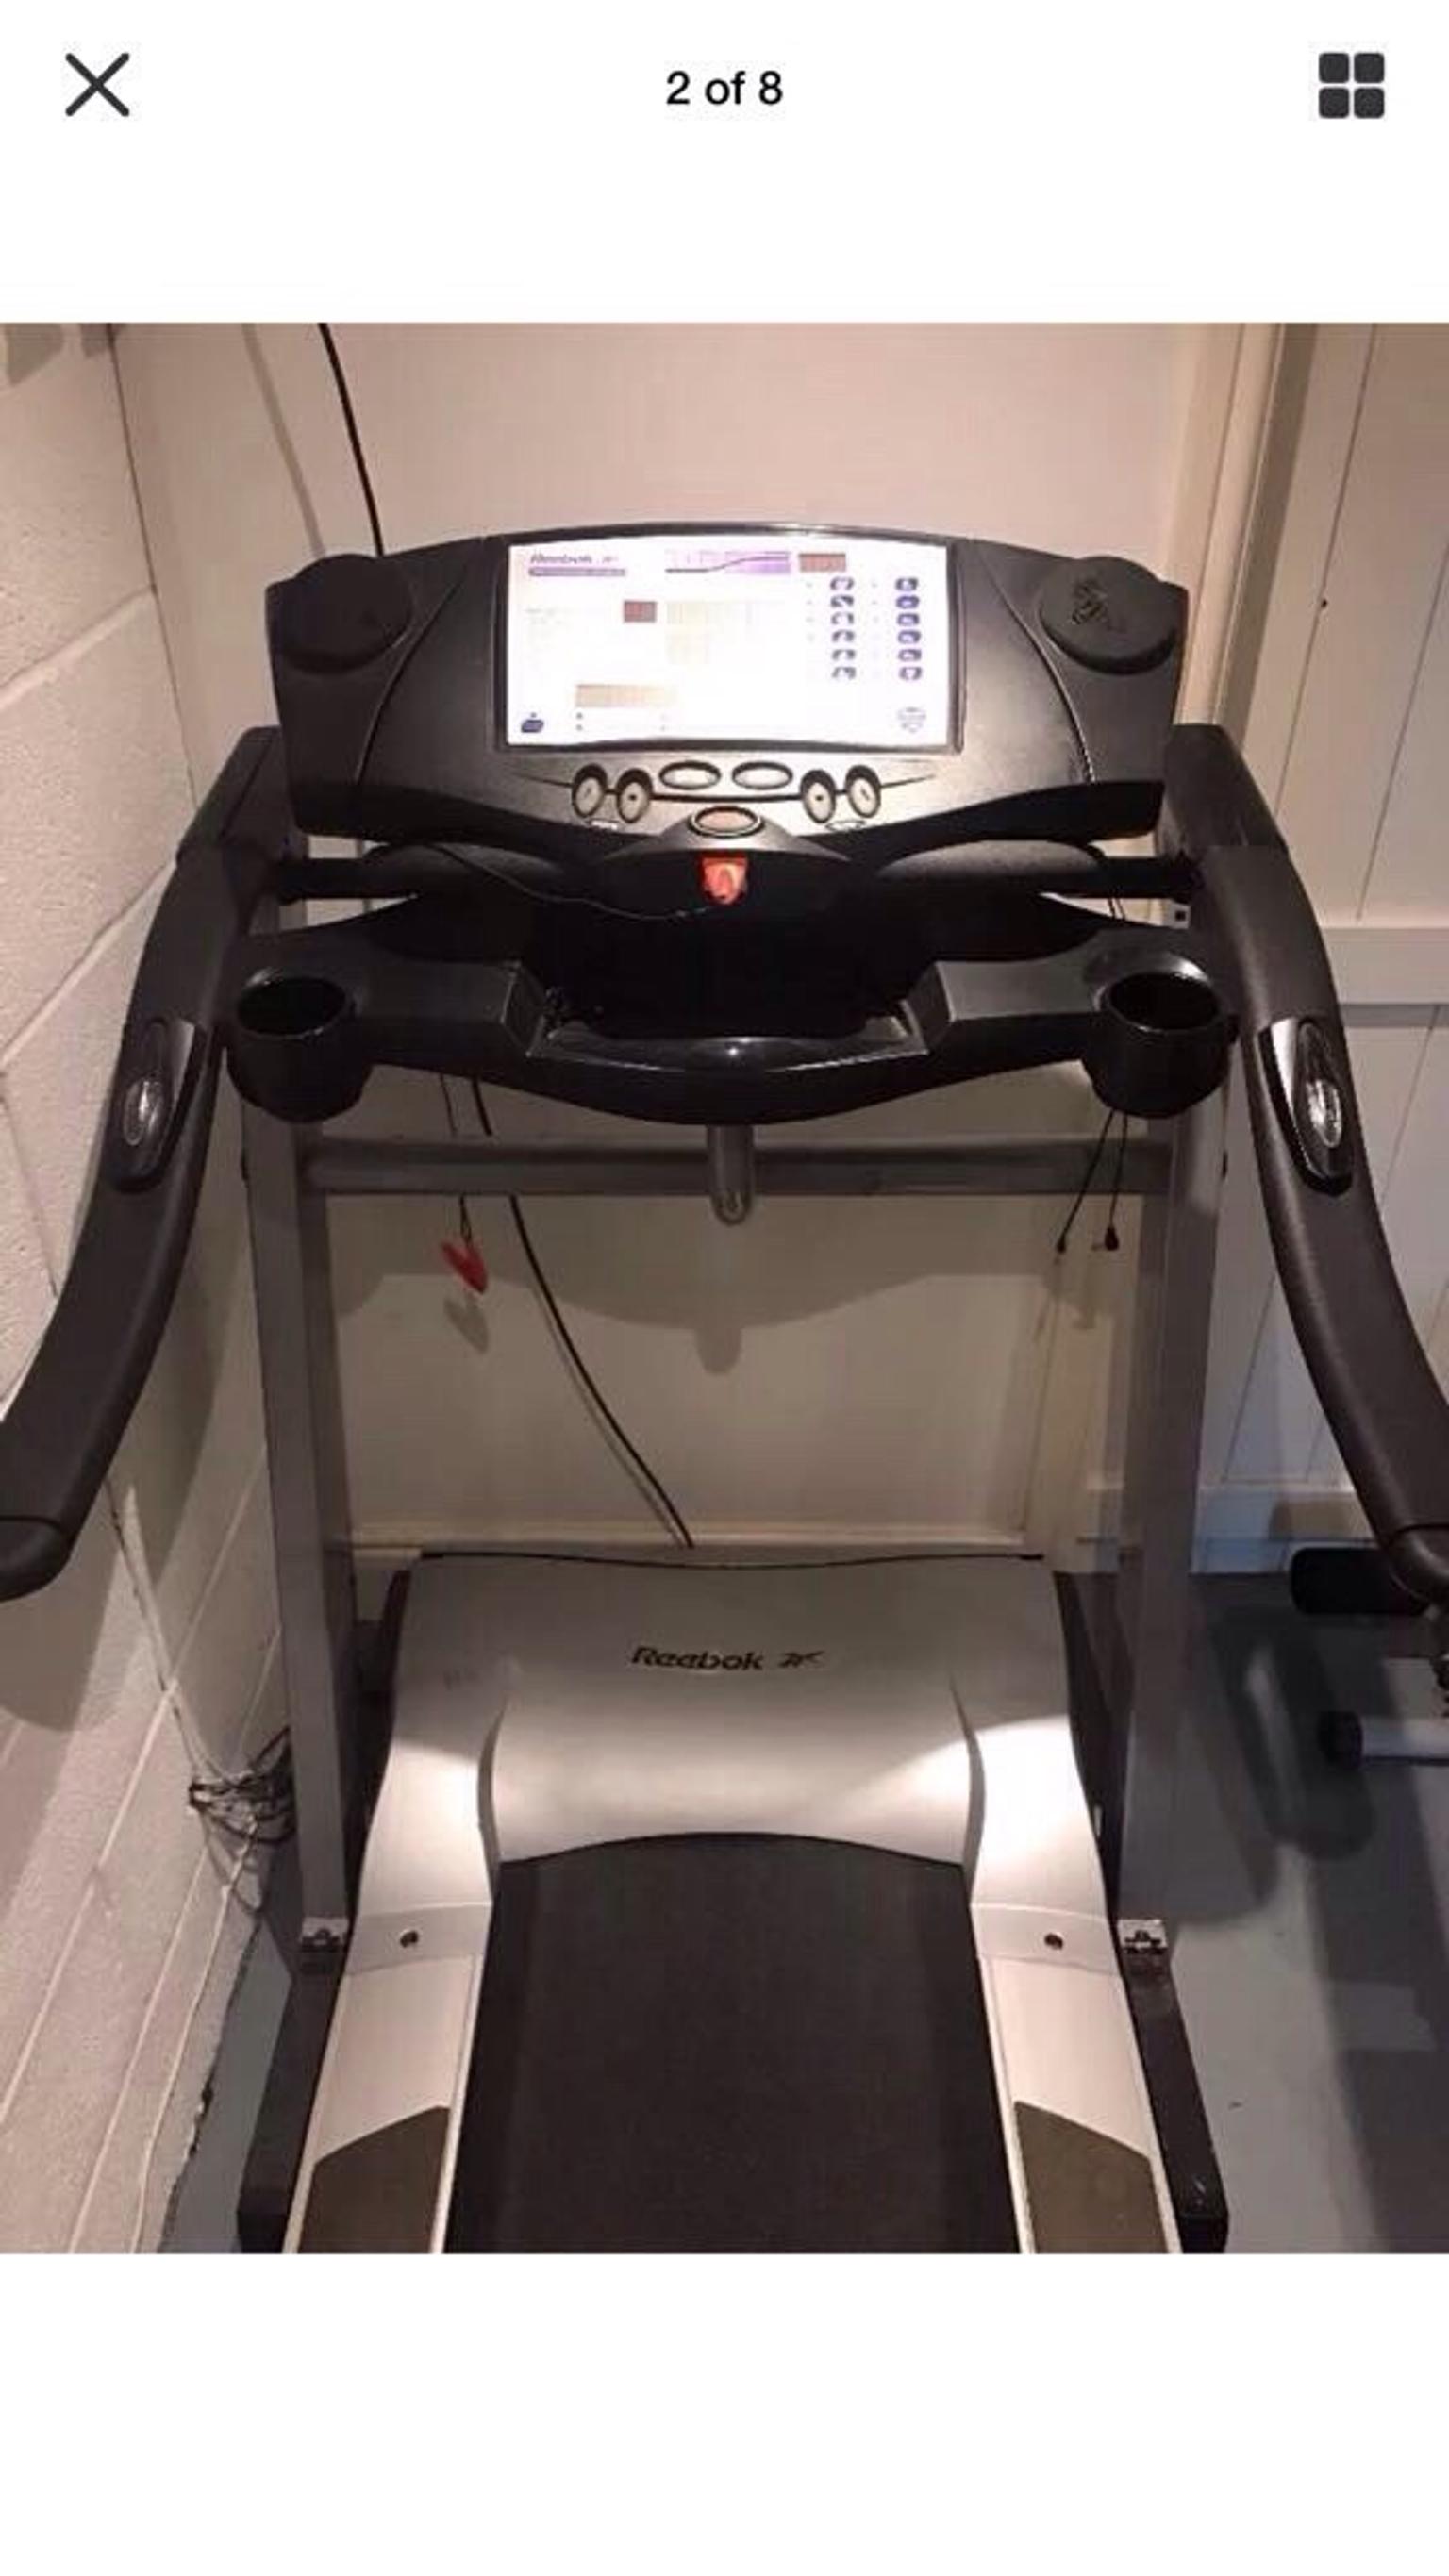 reebok premier run treadmill